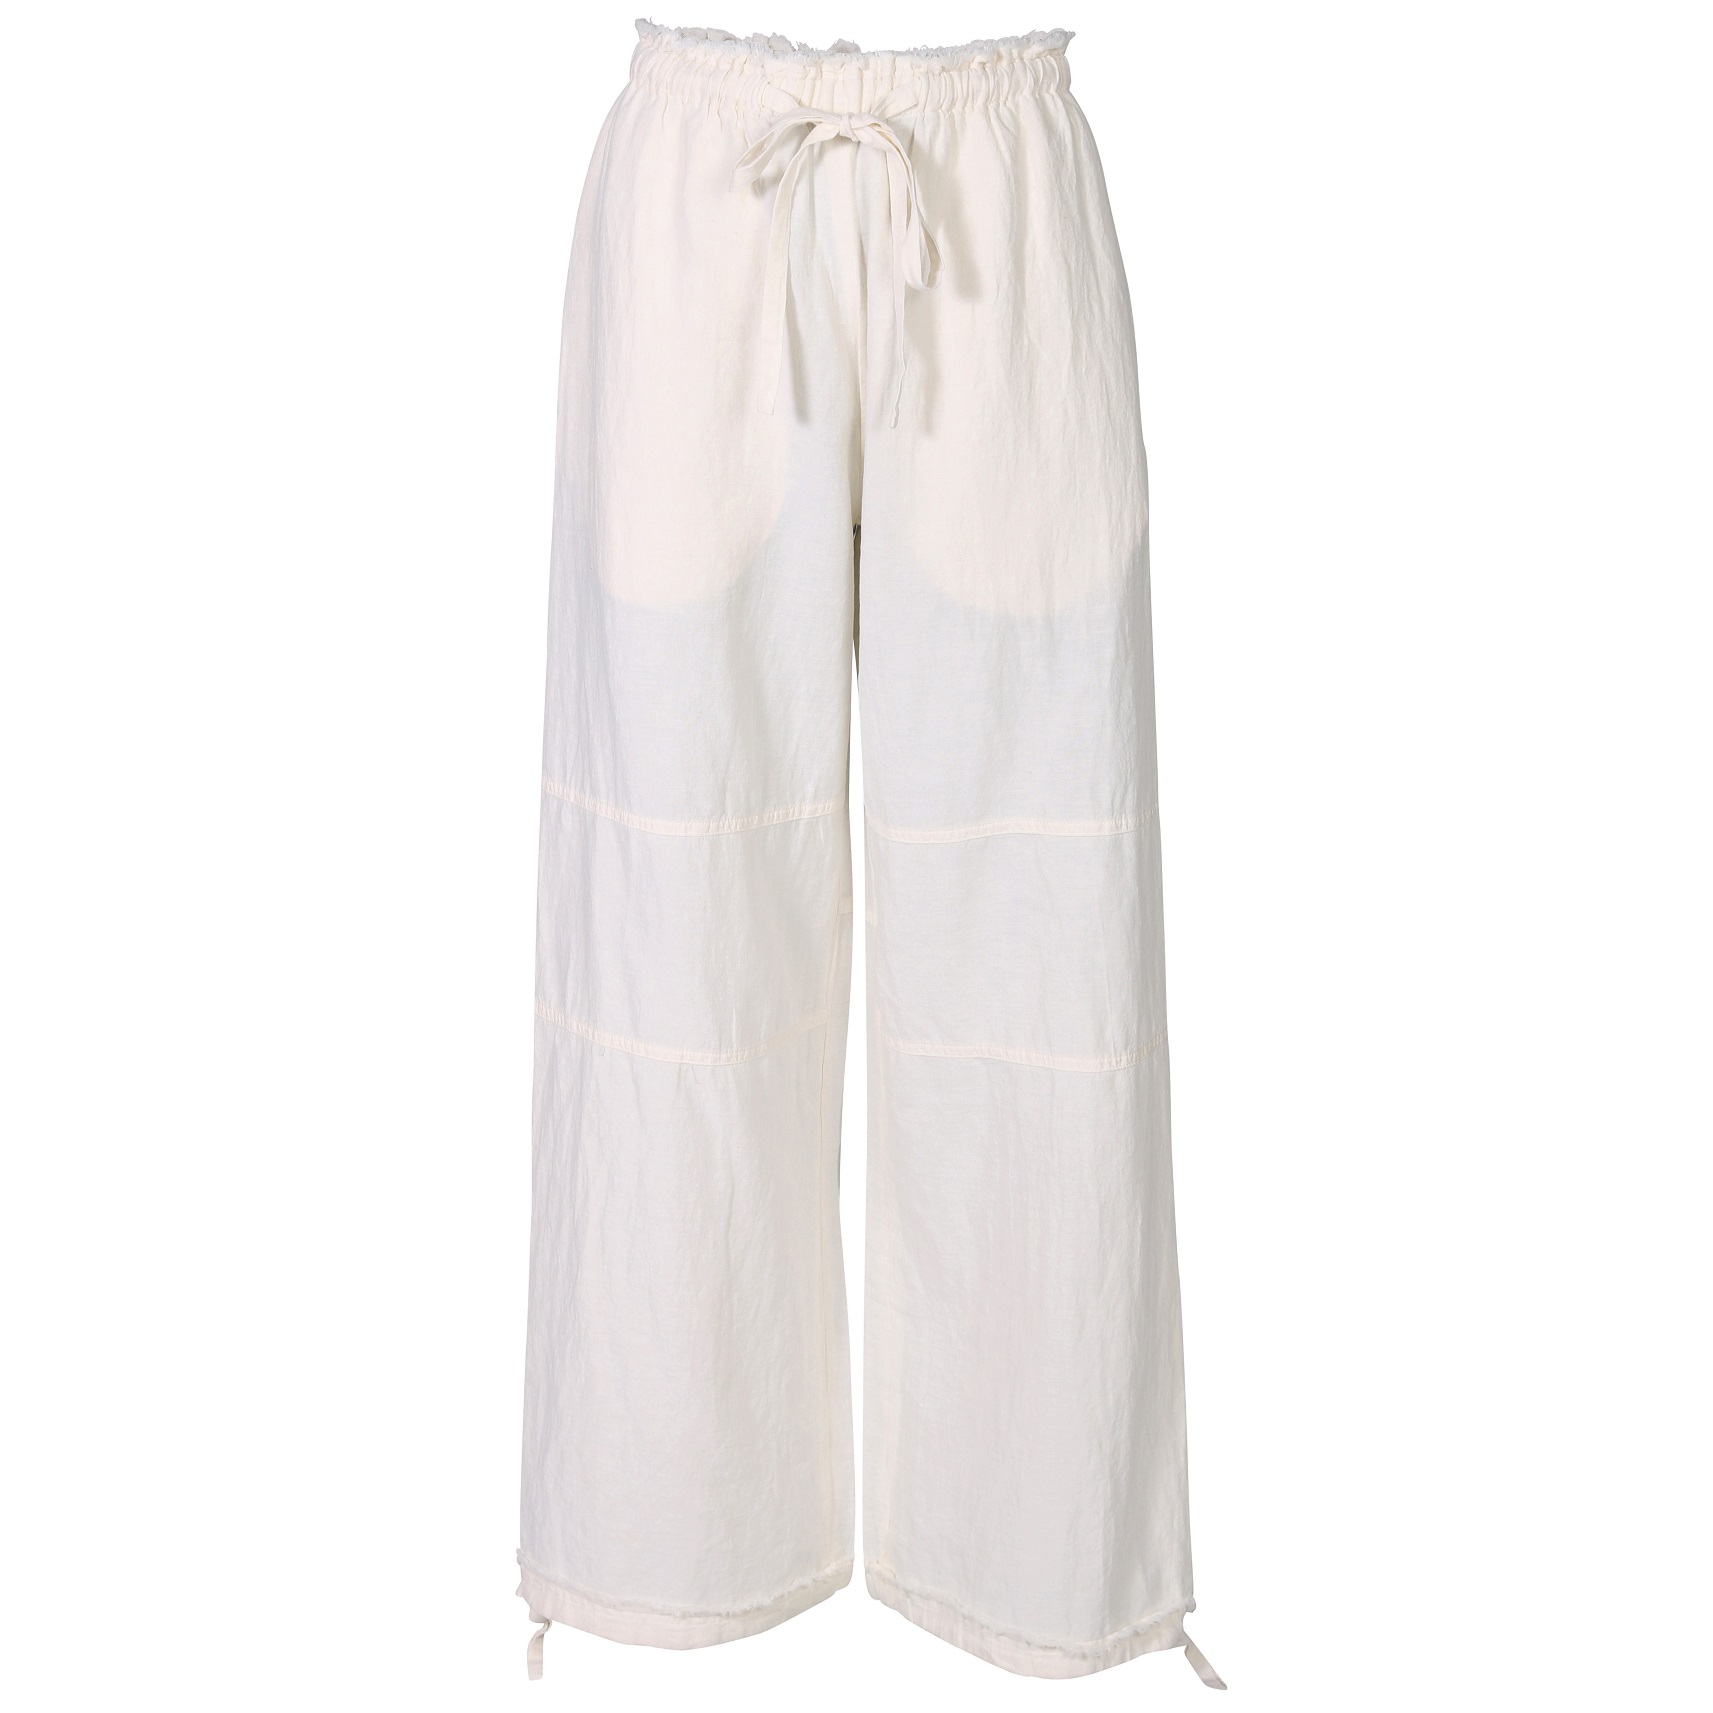 ACNE STUDIOS Cotton/Linen Pant in Warm White 38